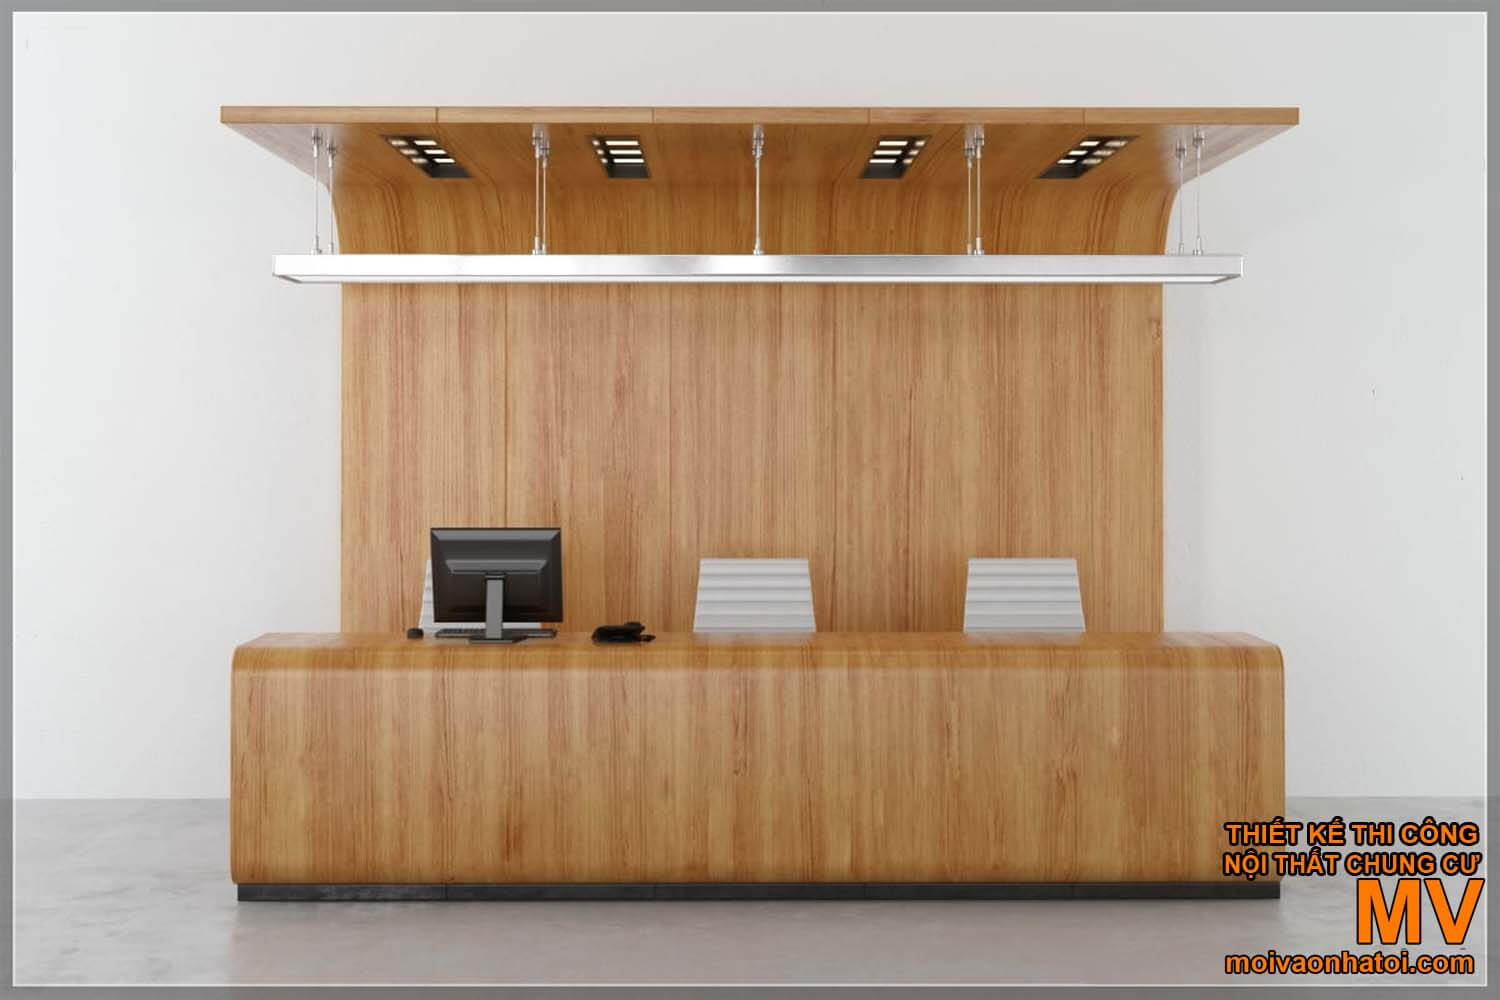 Bar design - wooden reception desk